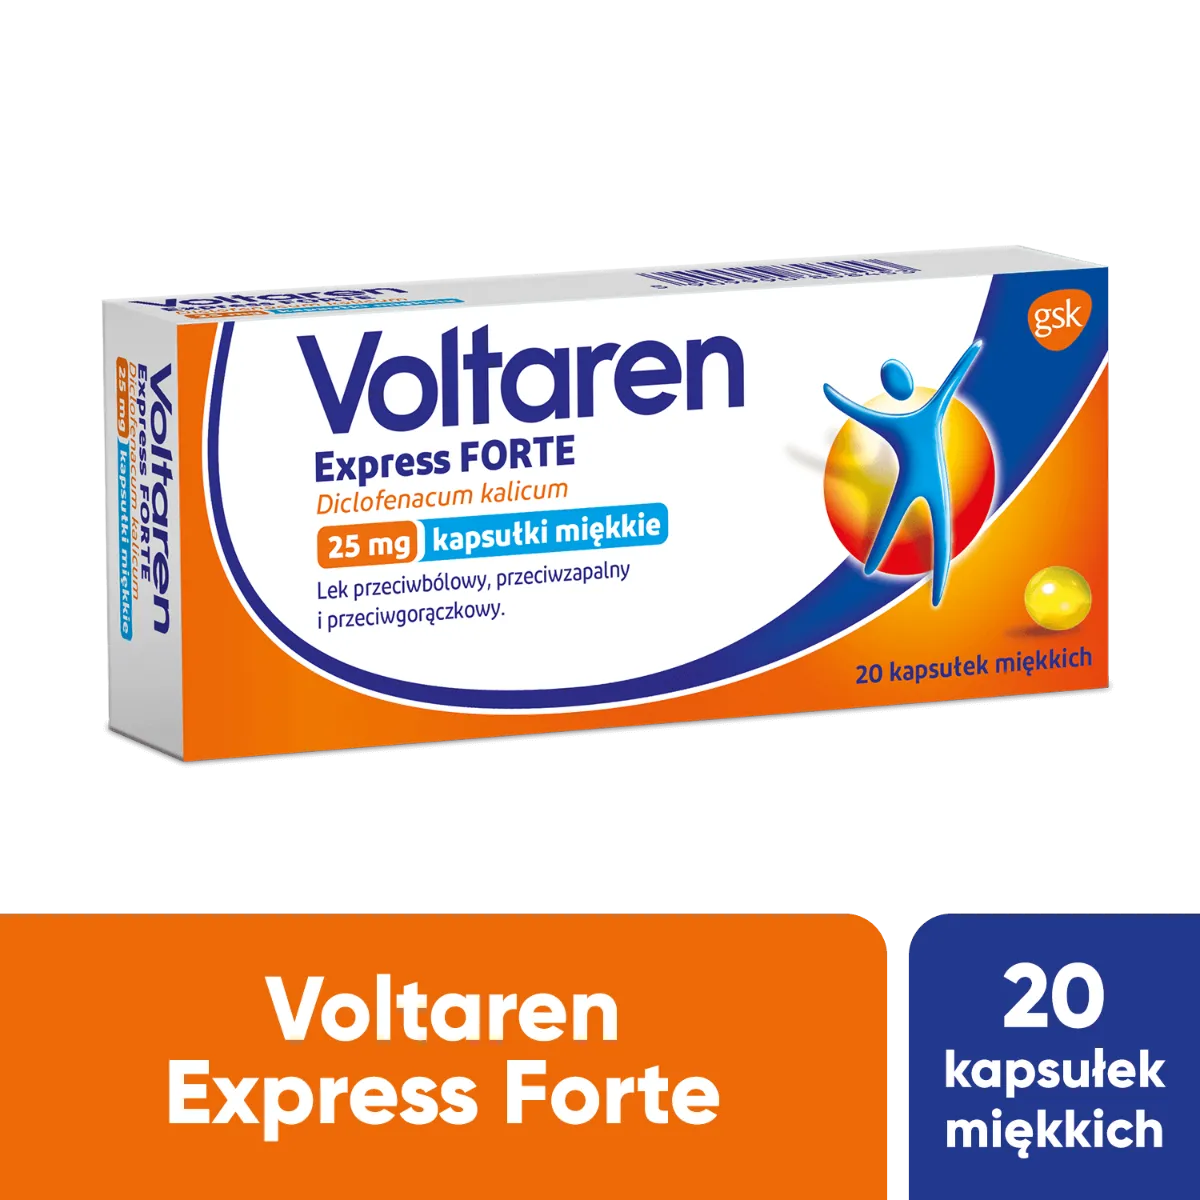 Voltaren Express Forte, 25 mg, 20 kapsułek miękkich